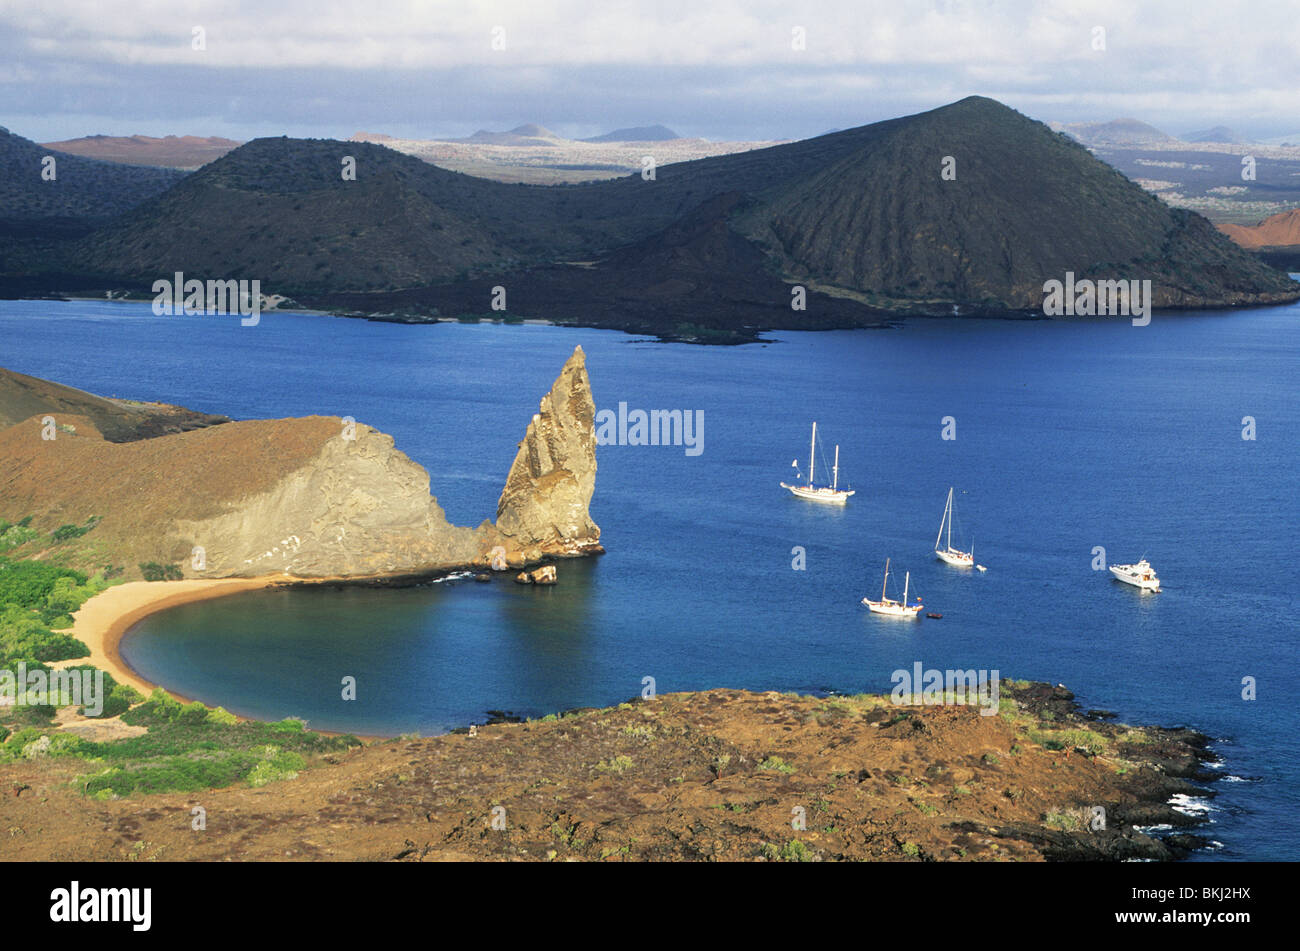 Ecuador, Galapagos Islands, Pinnacle Rock view with boats, Bartolome Island. Stock Photo